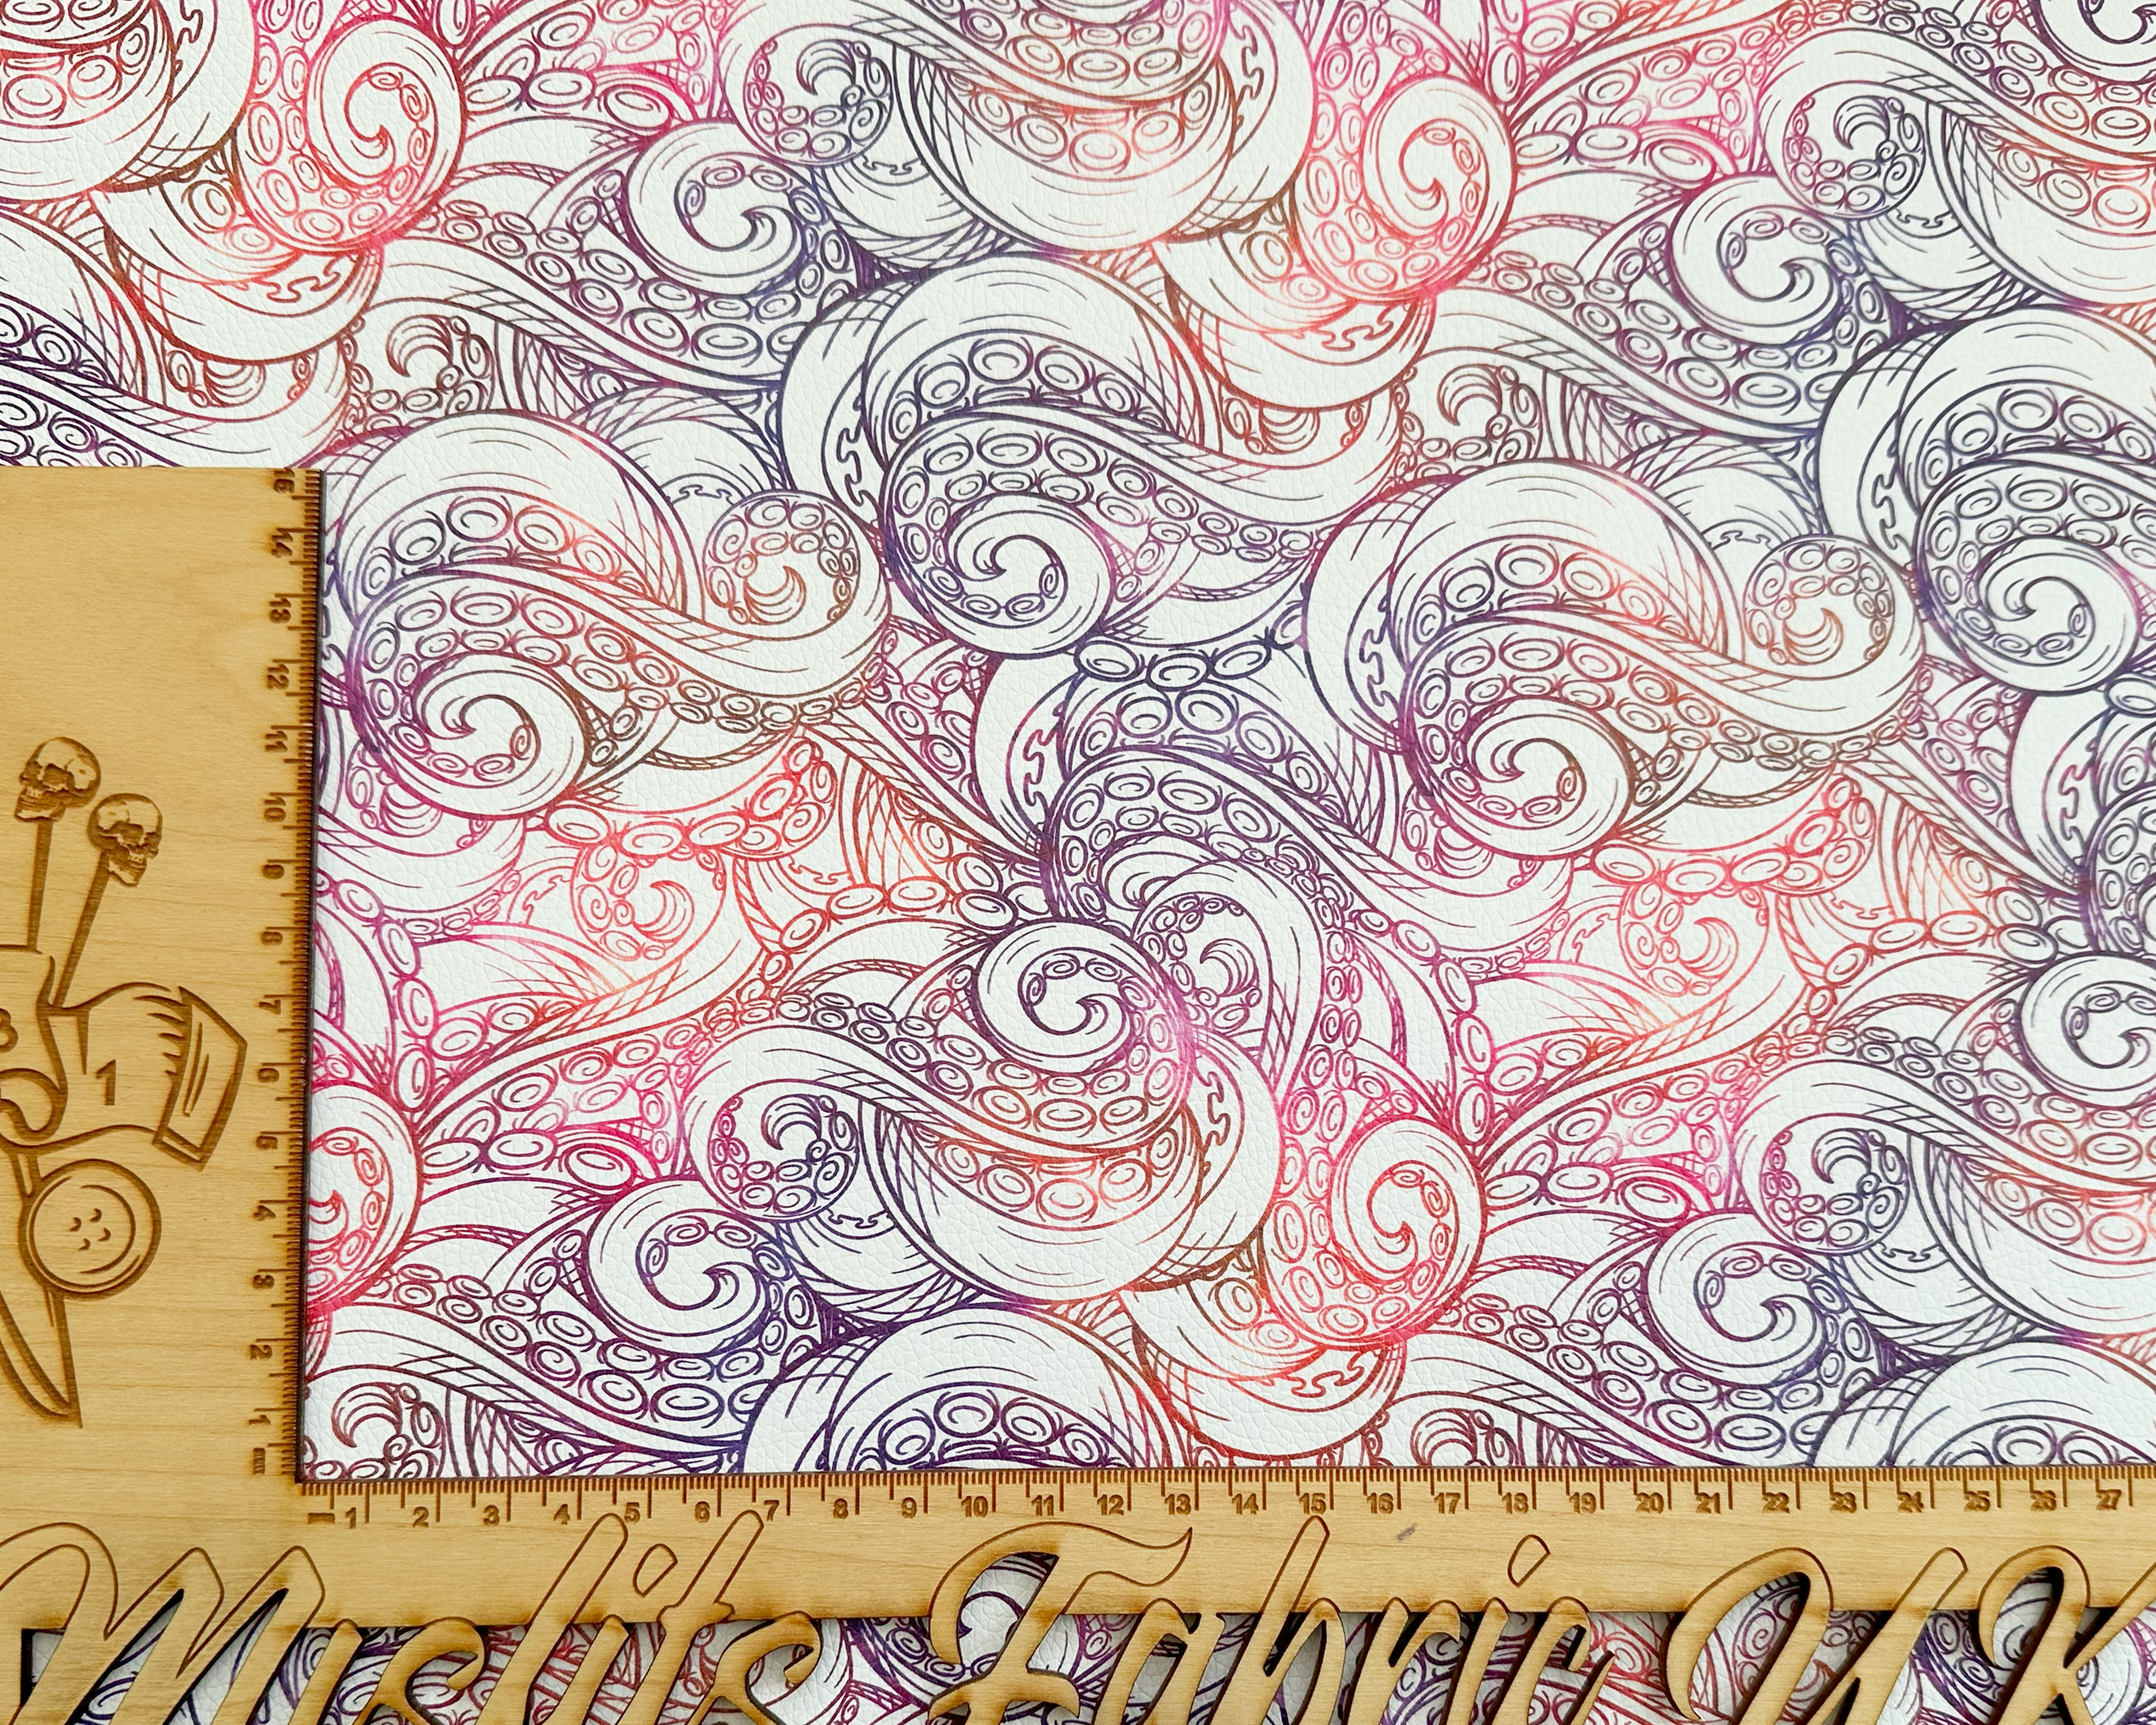 Textured Vinyl -  Tentacles, Octopus Print. Purple & Orange design.